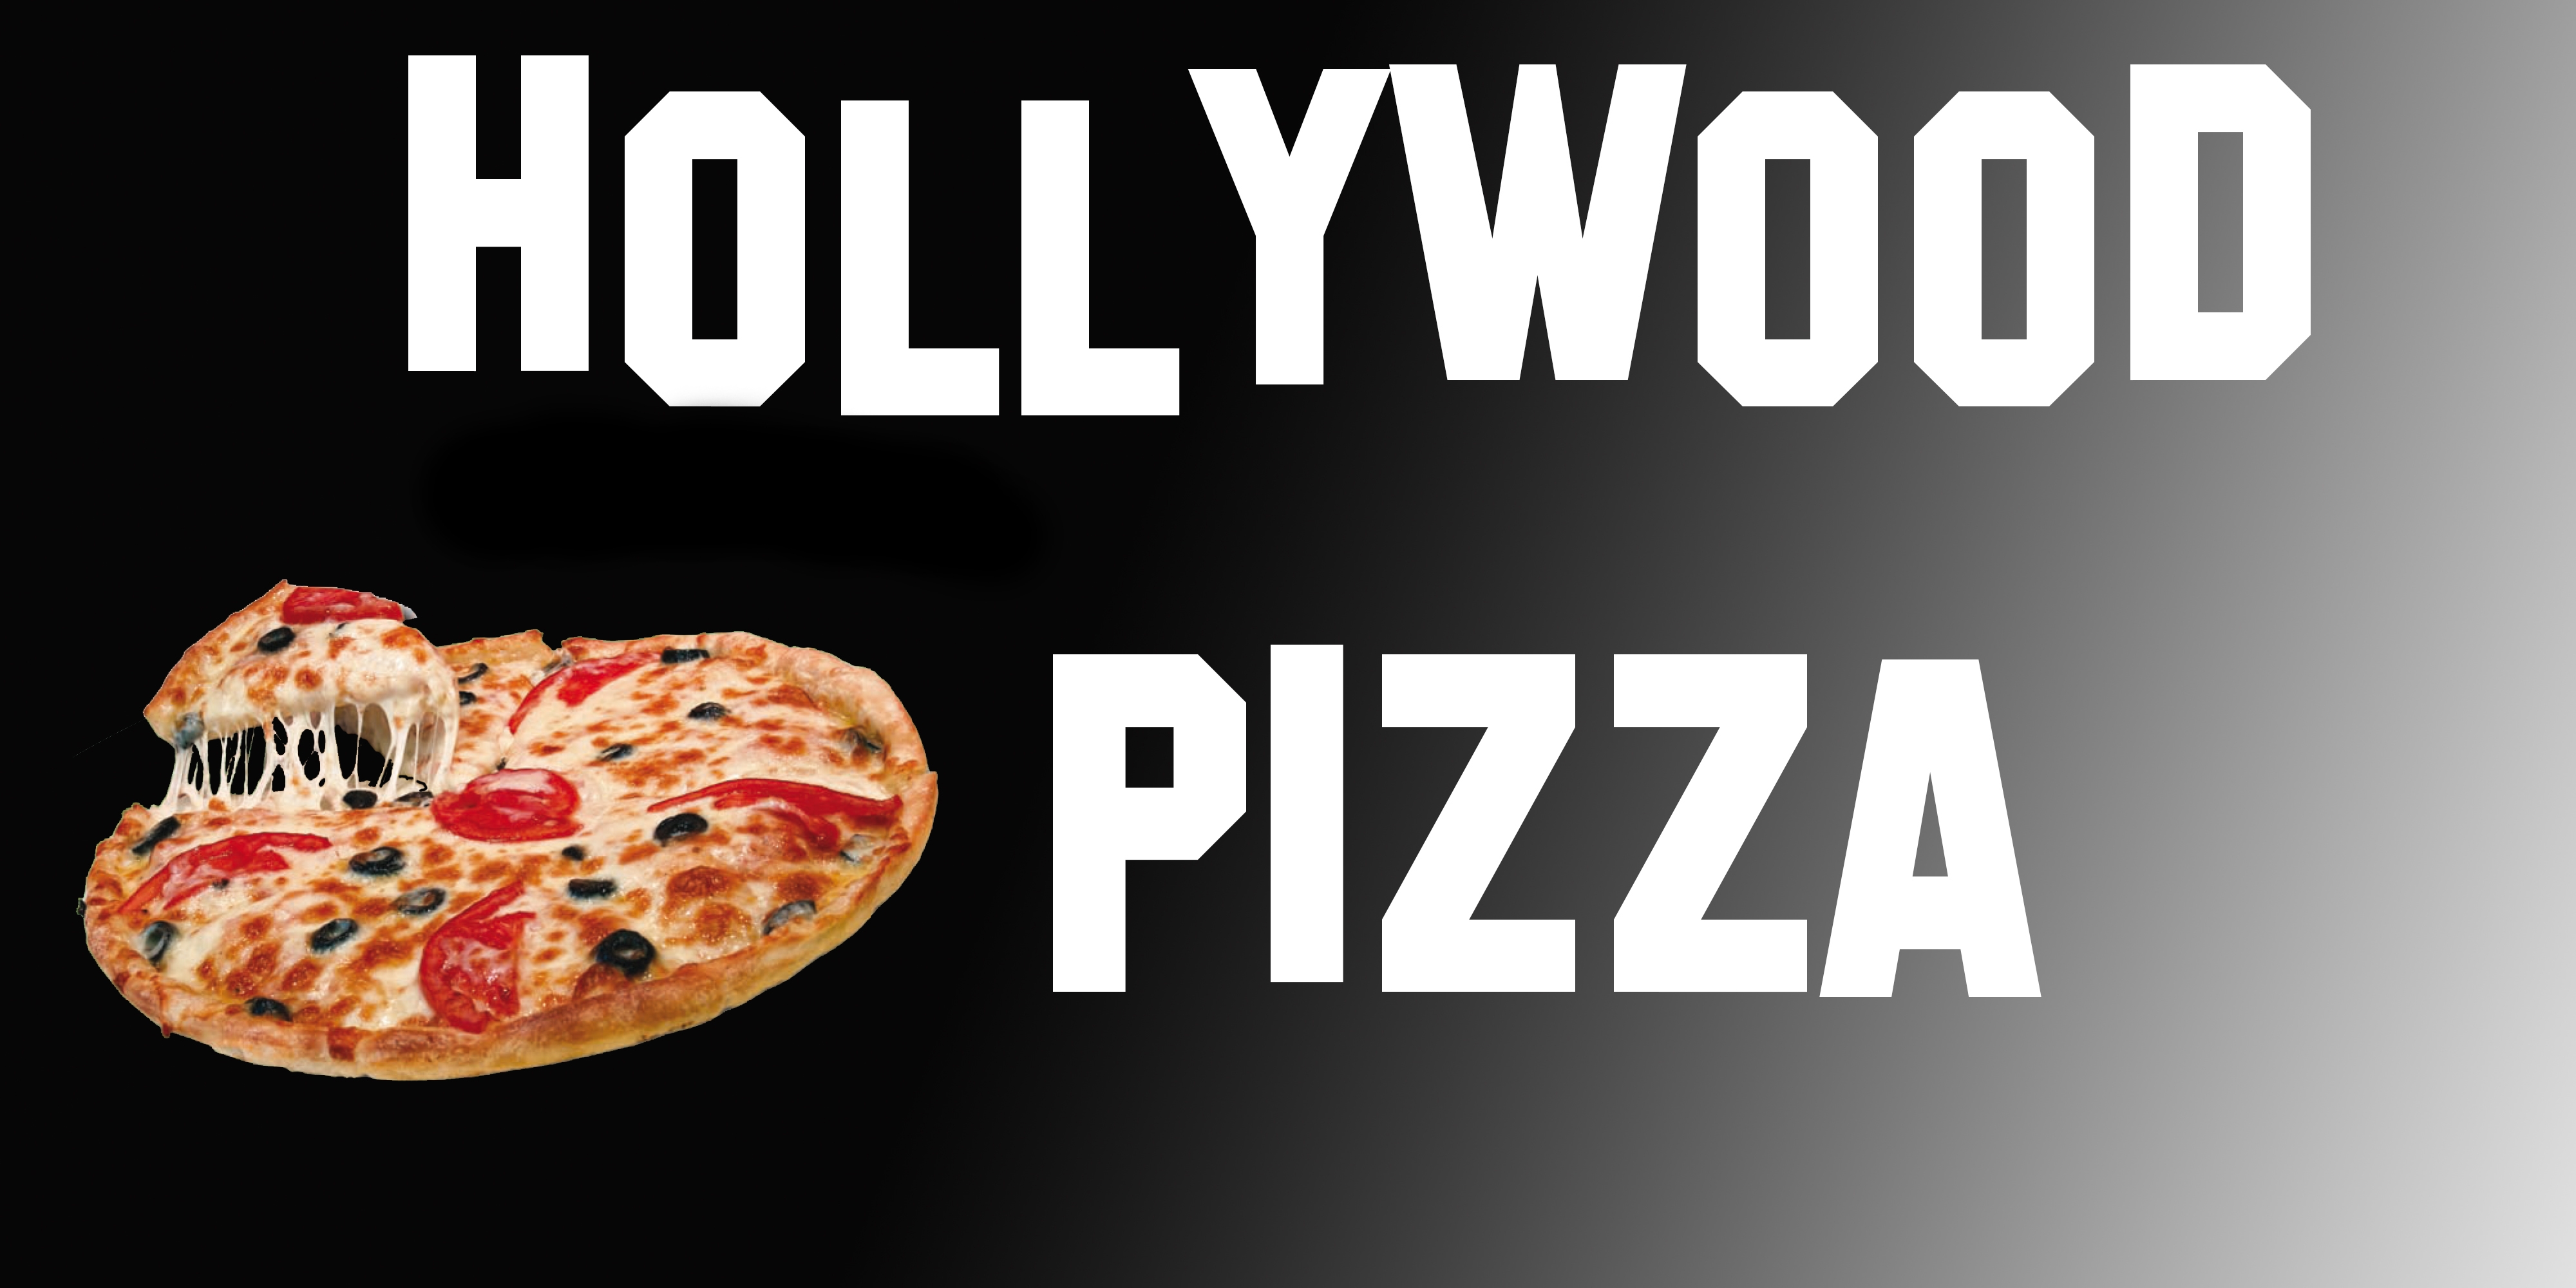 Immagini Pizzeria Hollywood Pizza